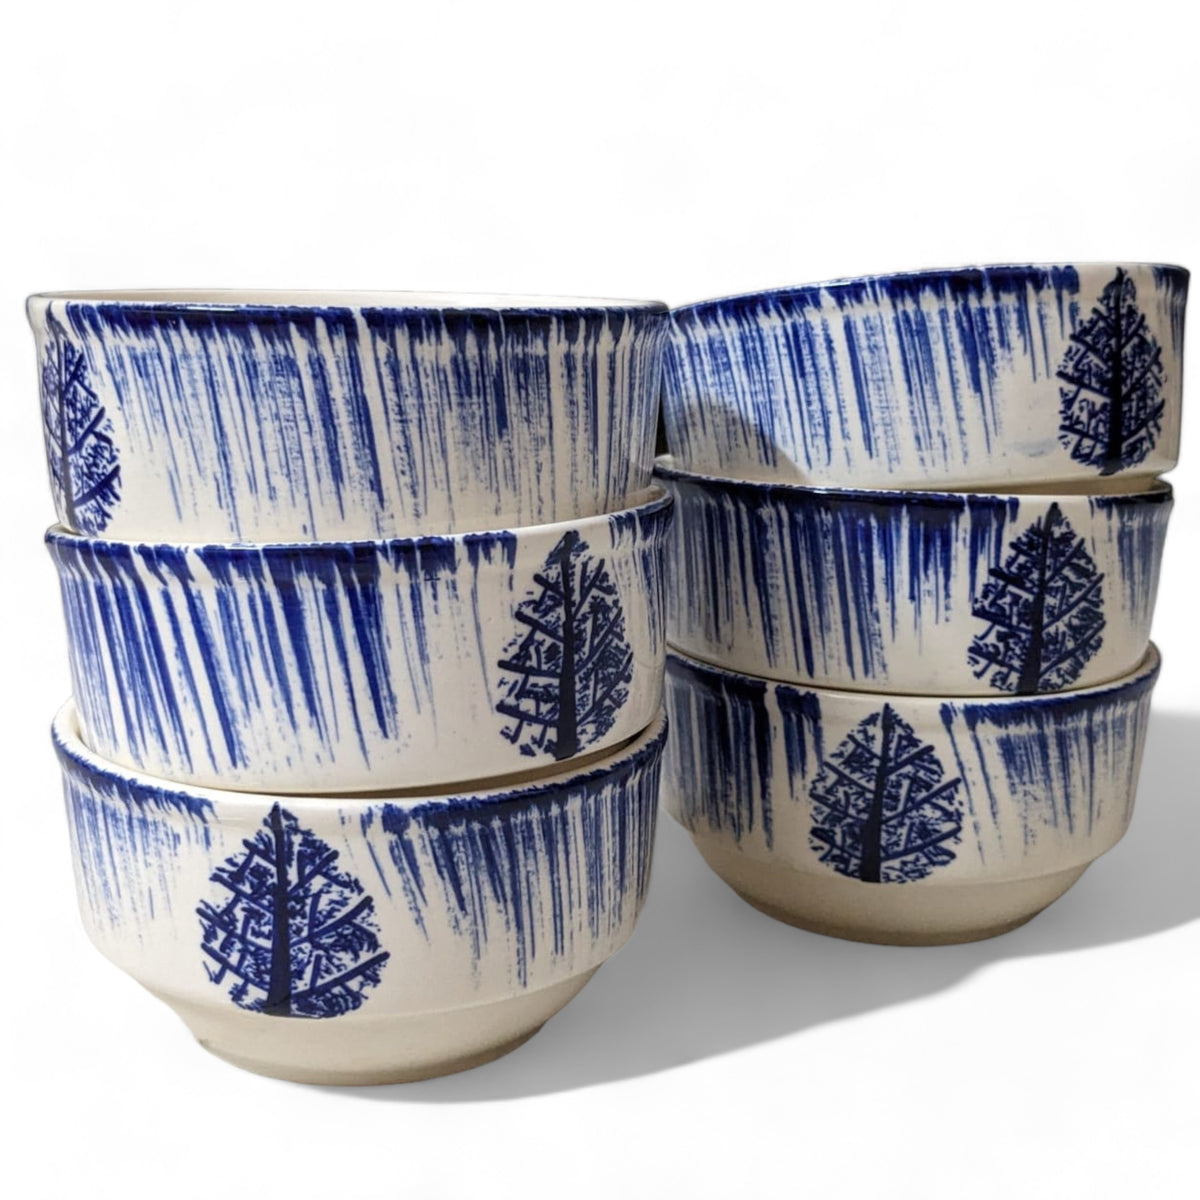 Claymistry Ceramic White with Traditional Leaf Prints Serving Bowl | Set of 6 | 12cm * 12cm * 6cm | Glossy | Dishwasher & Microwave Safe | Salad, Dessert, Mixing Bowl | Premium Kitchen Crockery